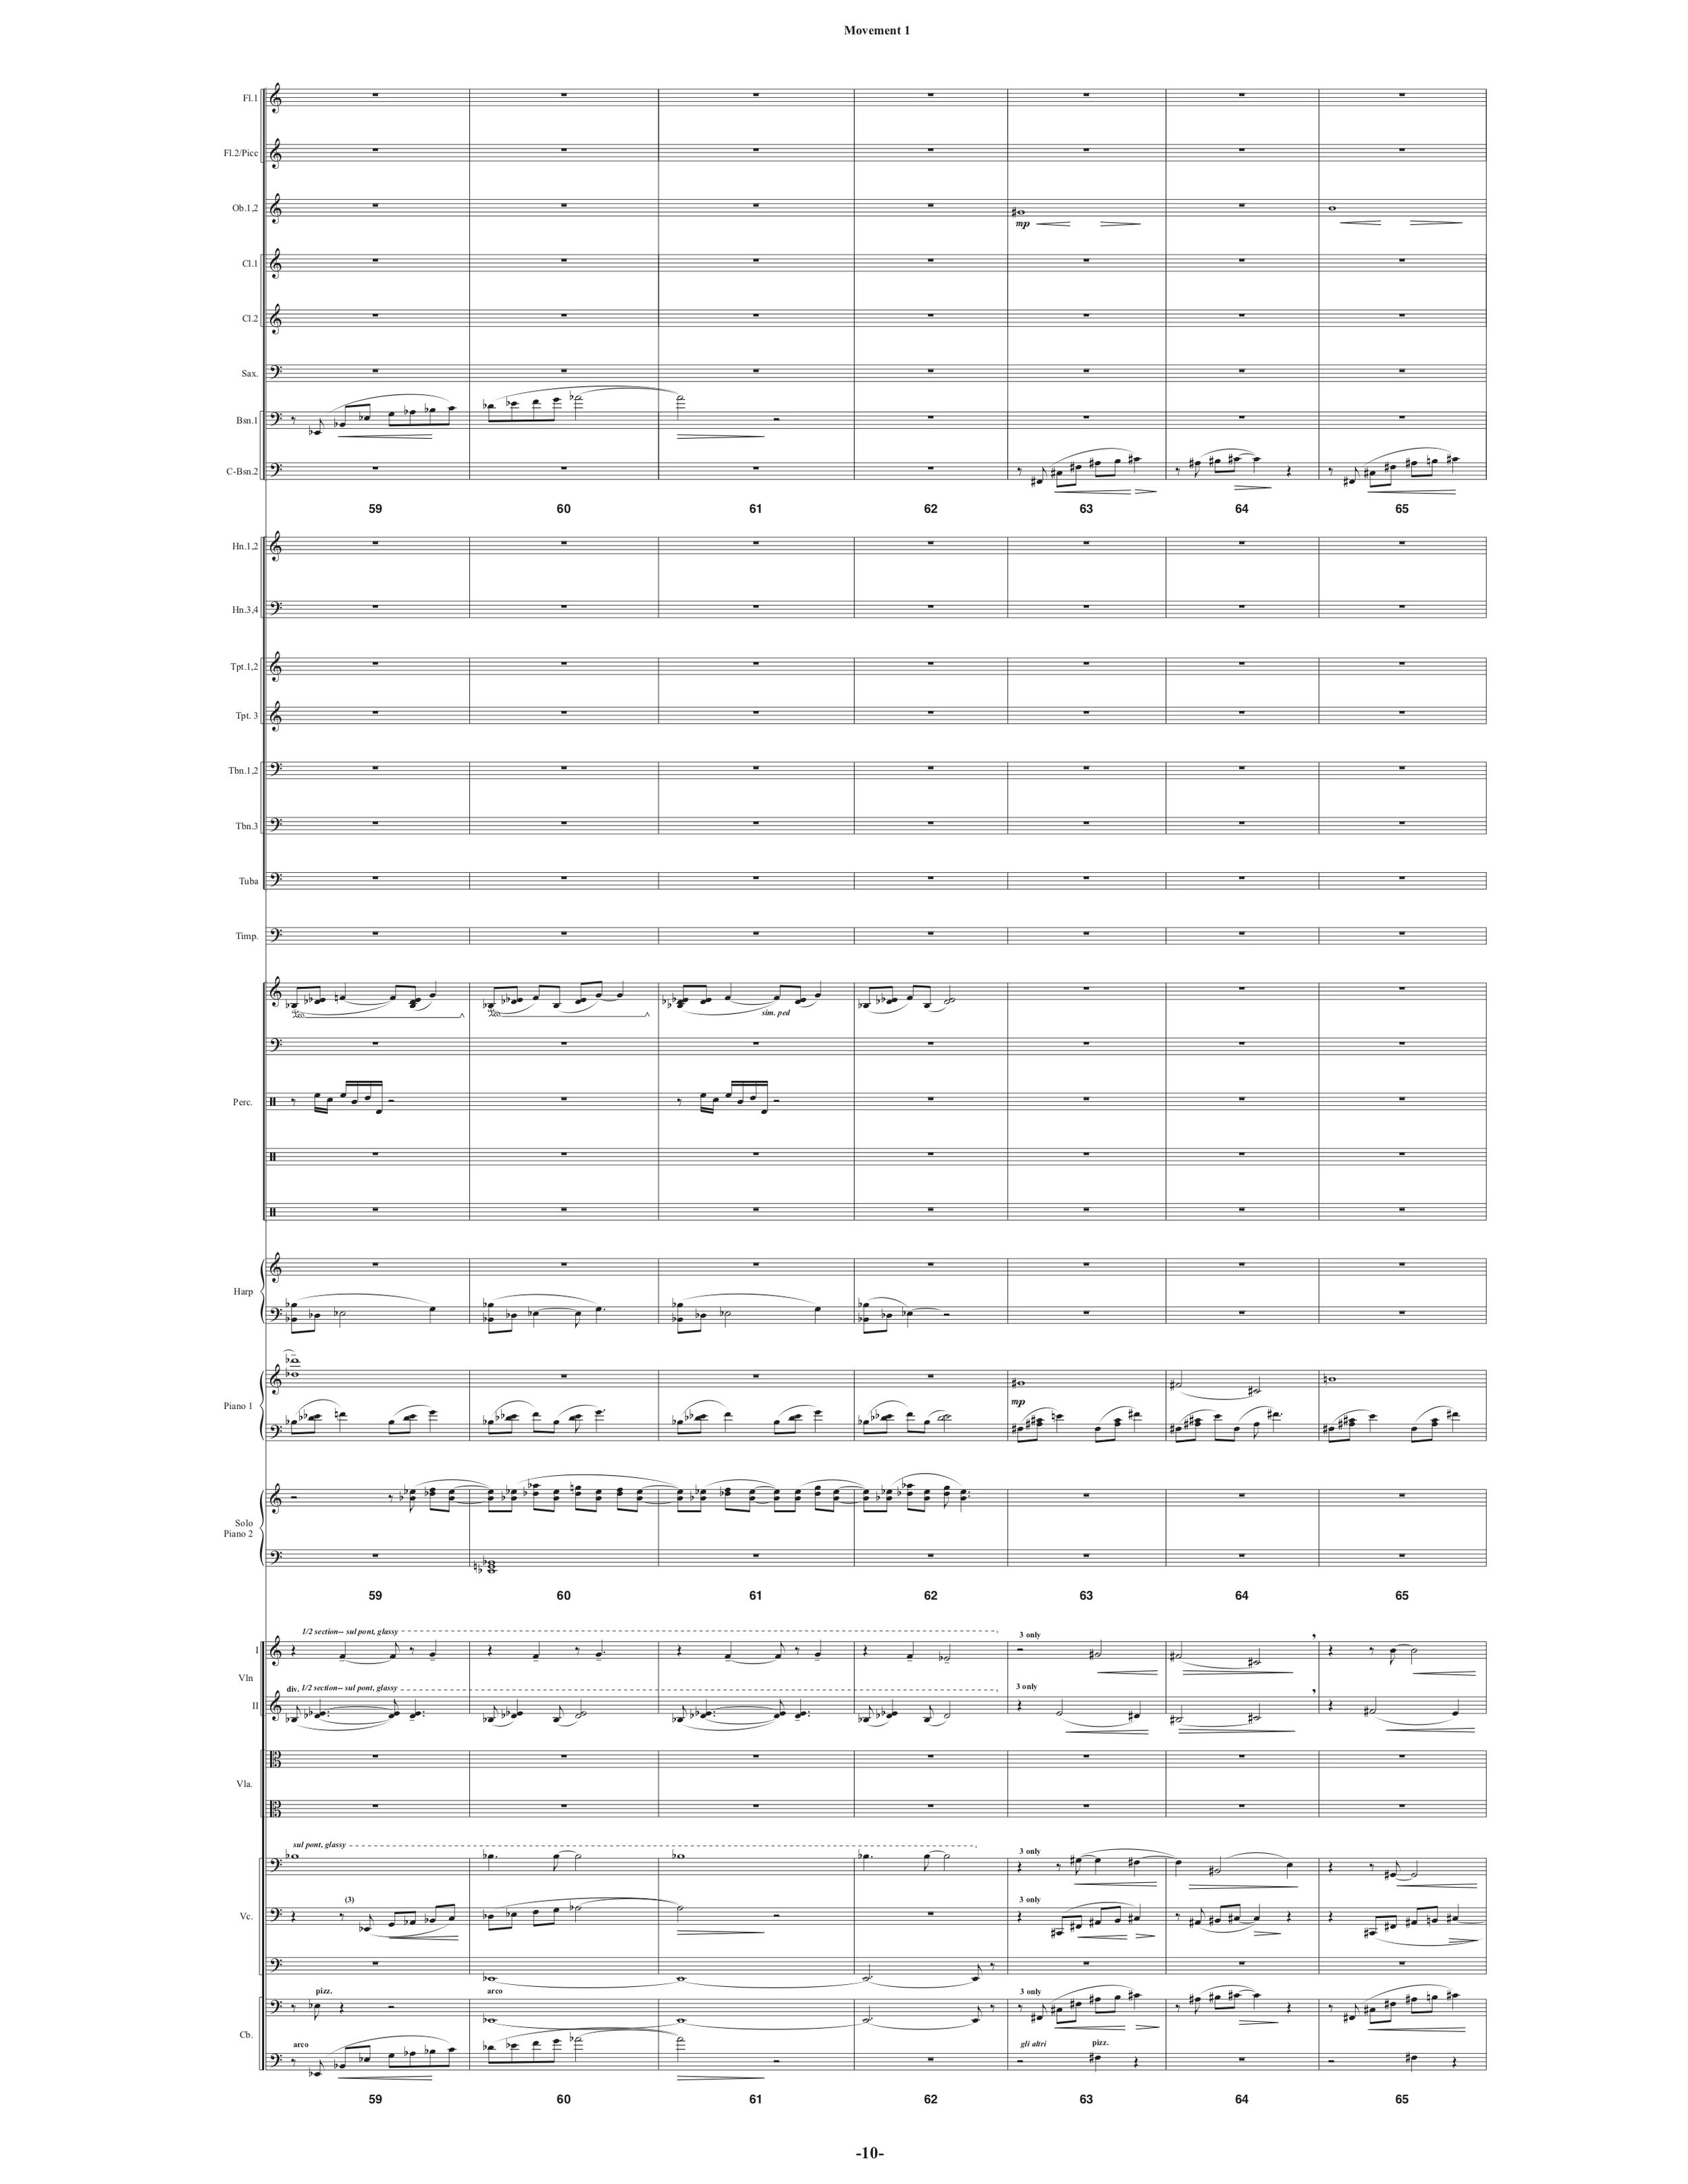 Symphony_Orch & 2 Pianos p15.jpg